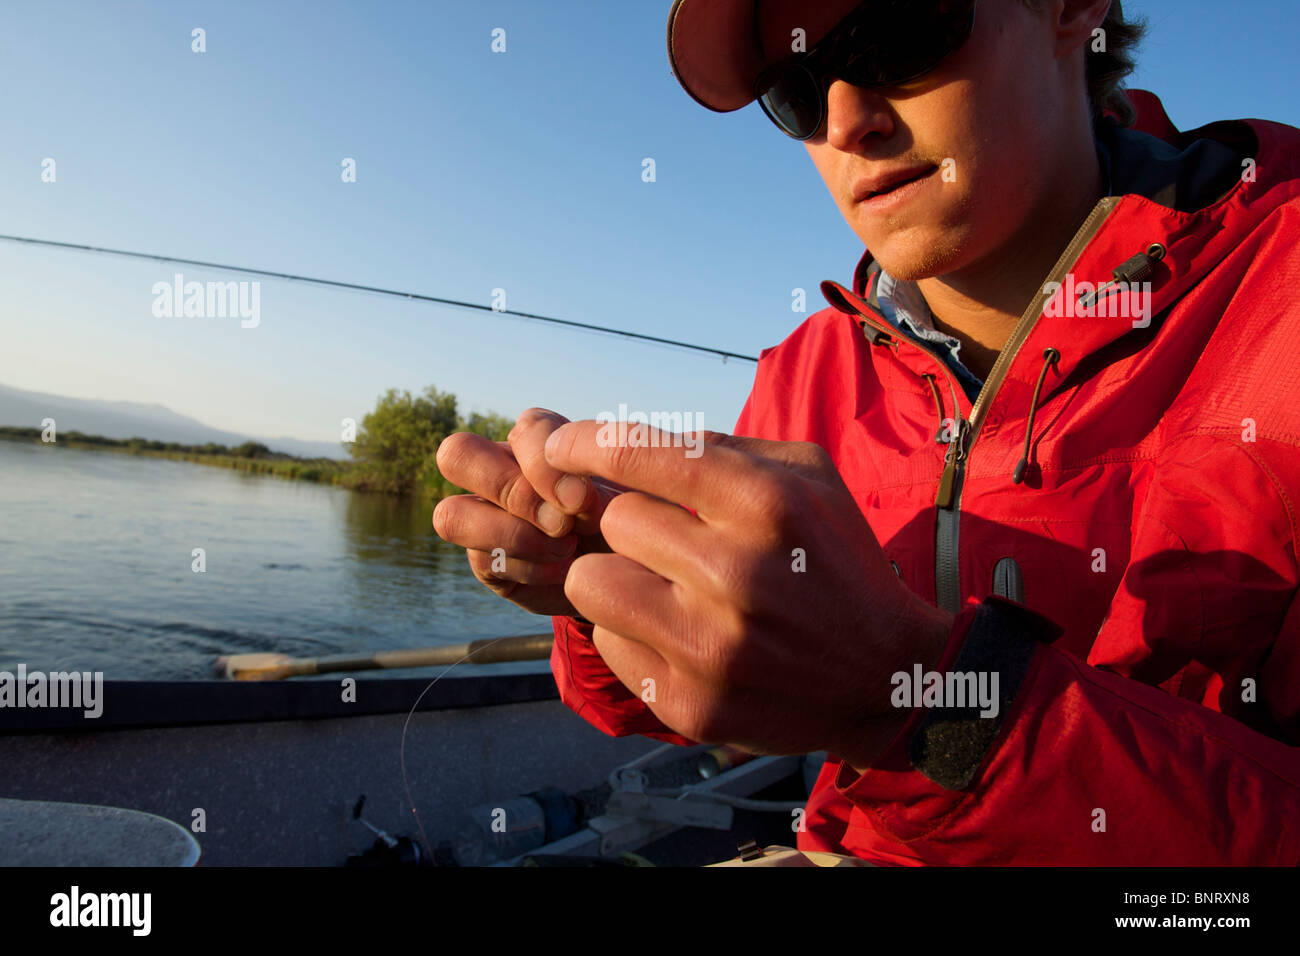 A man prepares to fish on the Teton River near Driggs, Idaho. Stock Photo